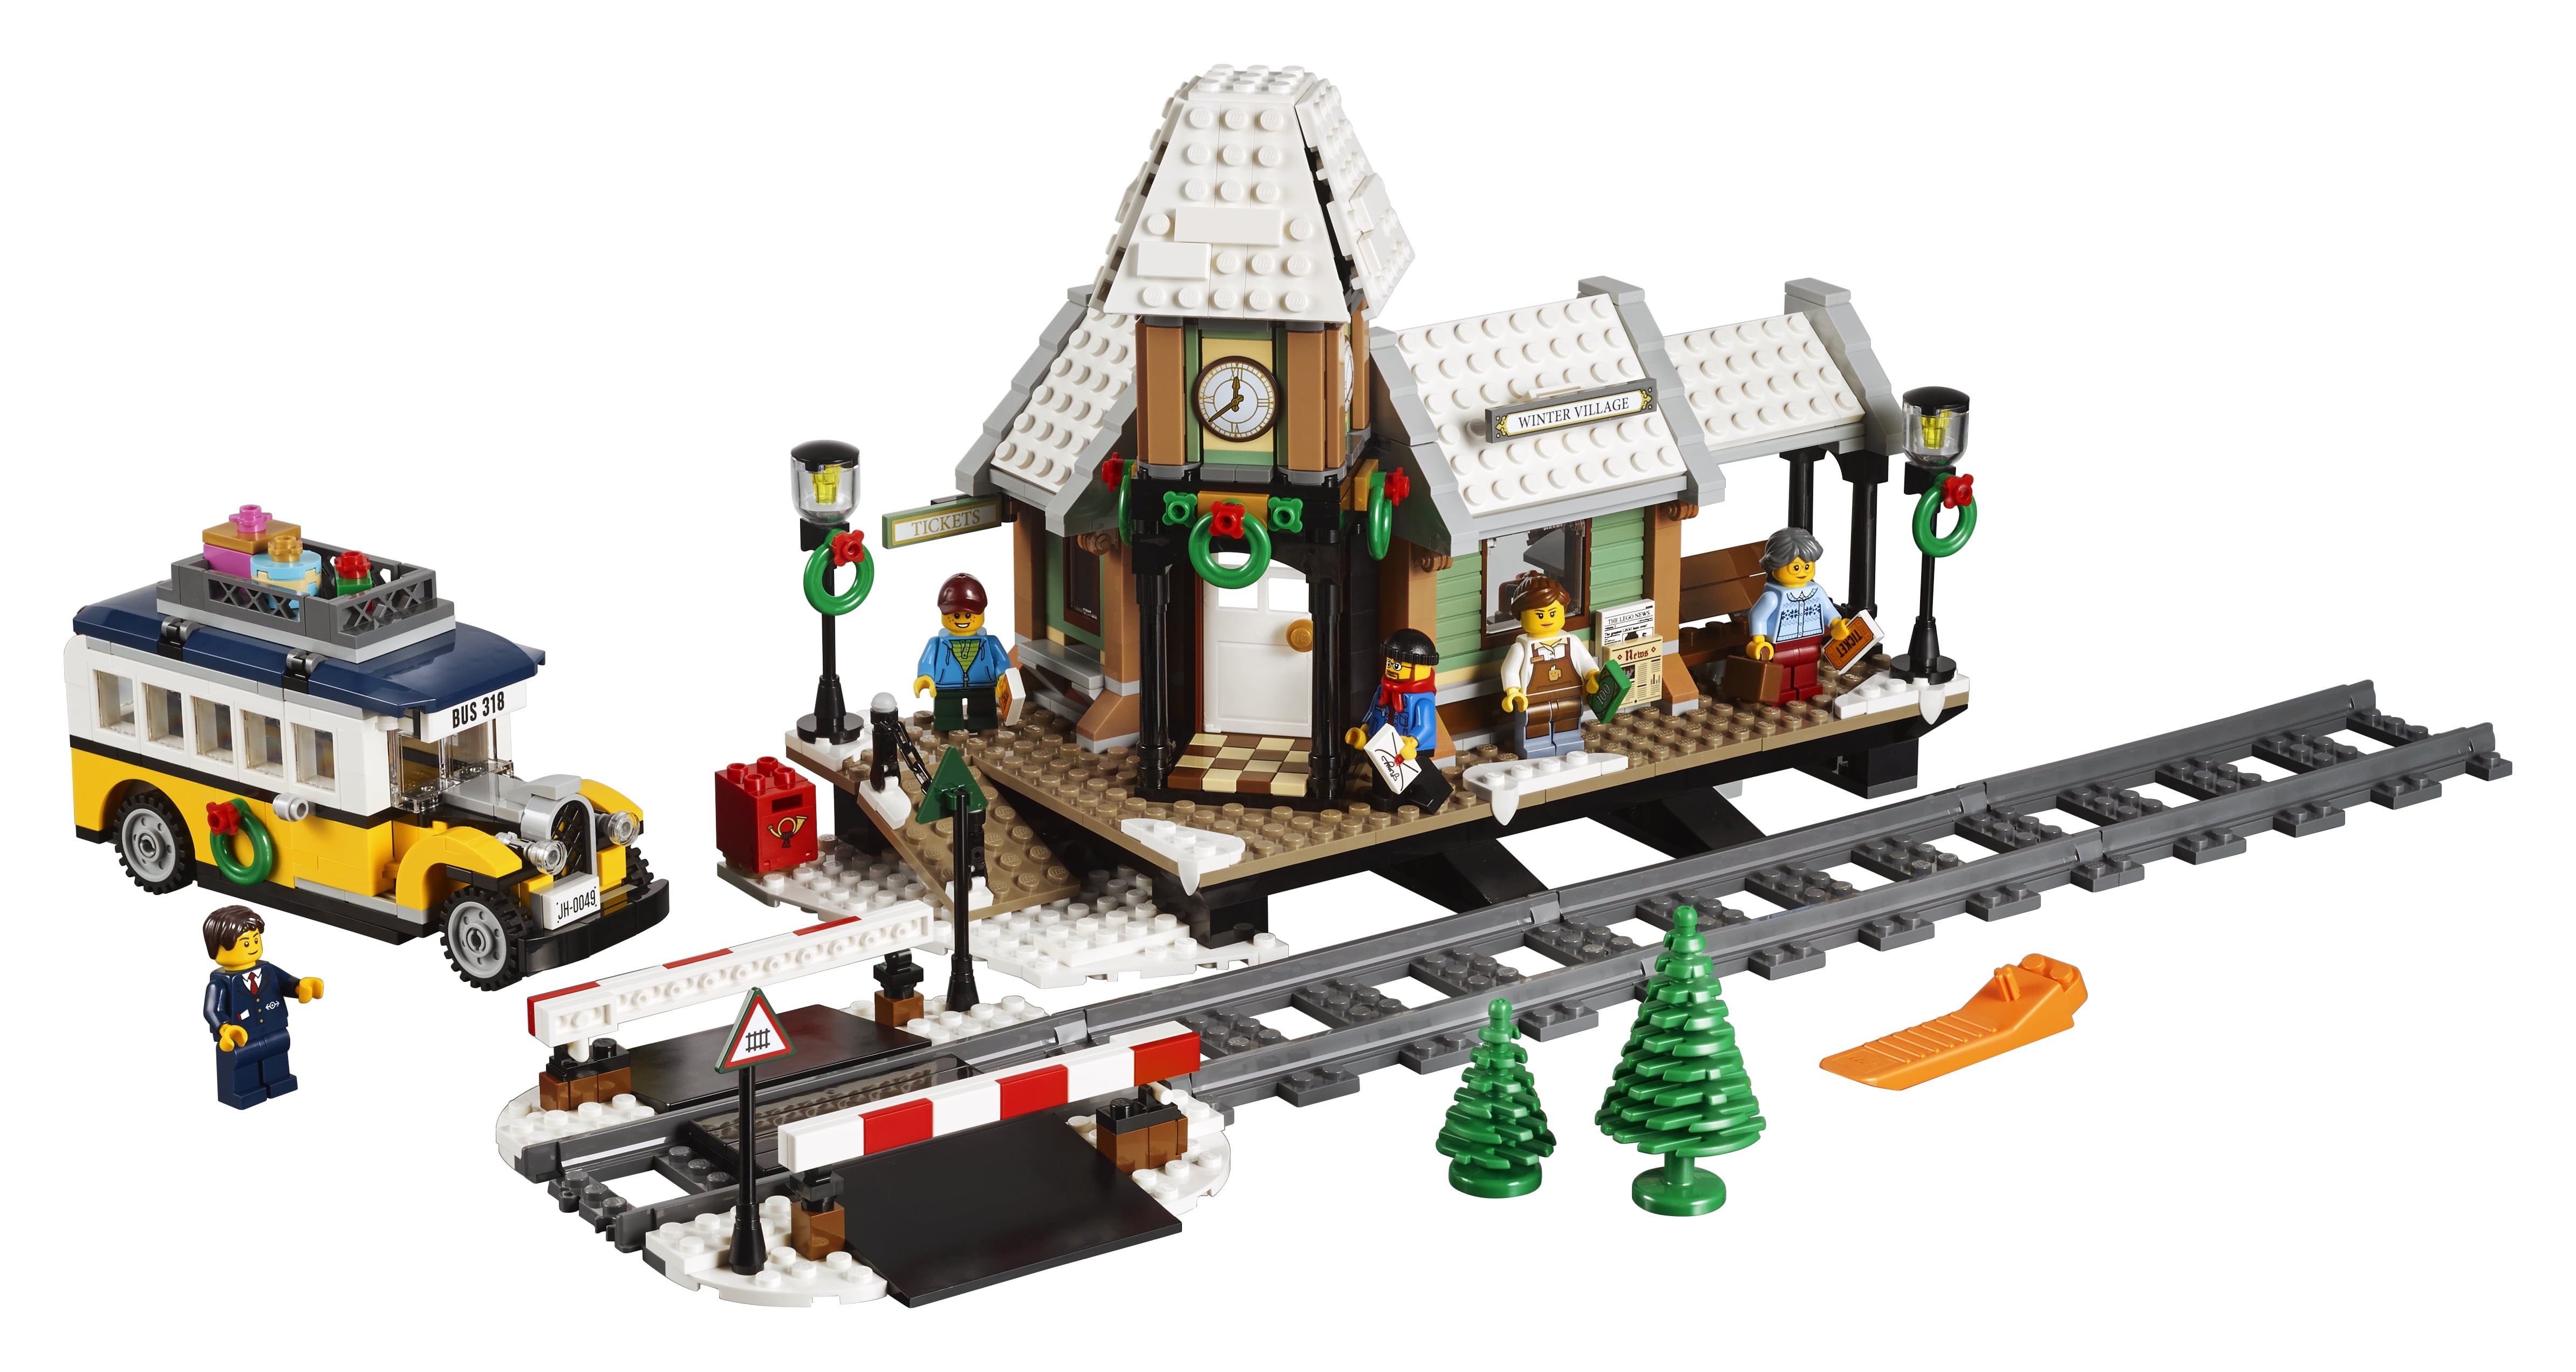 LEGO Winter Village Station 10259 - Walmart.com